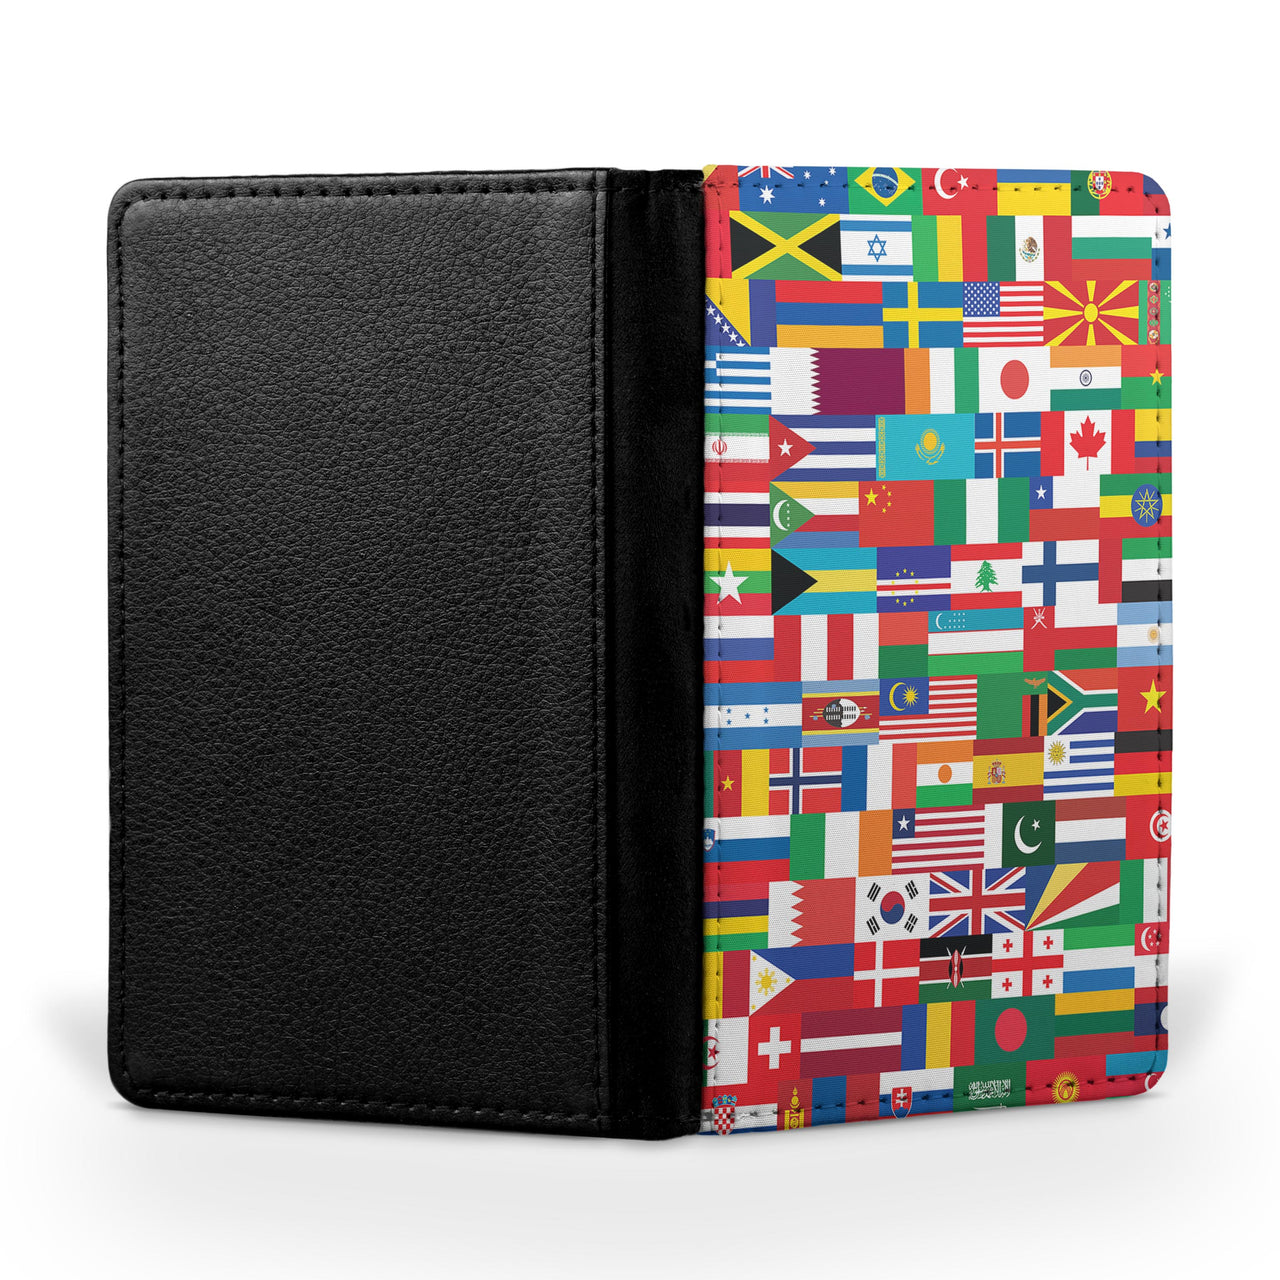 World Flags Designed Passport & Travel Cases